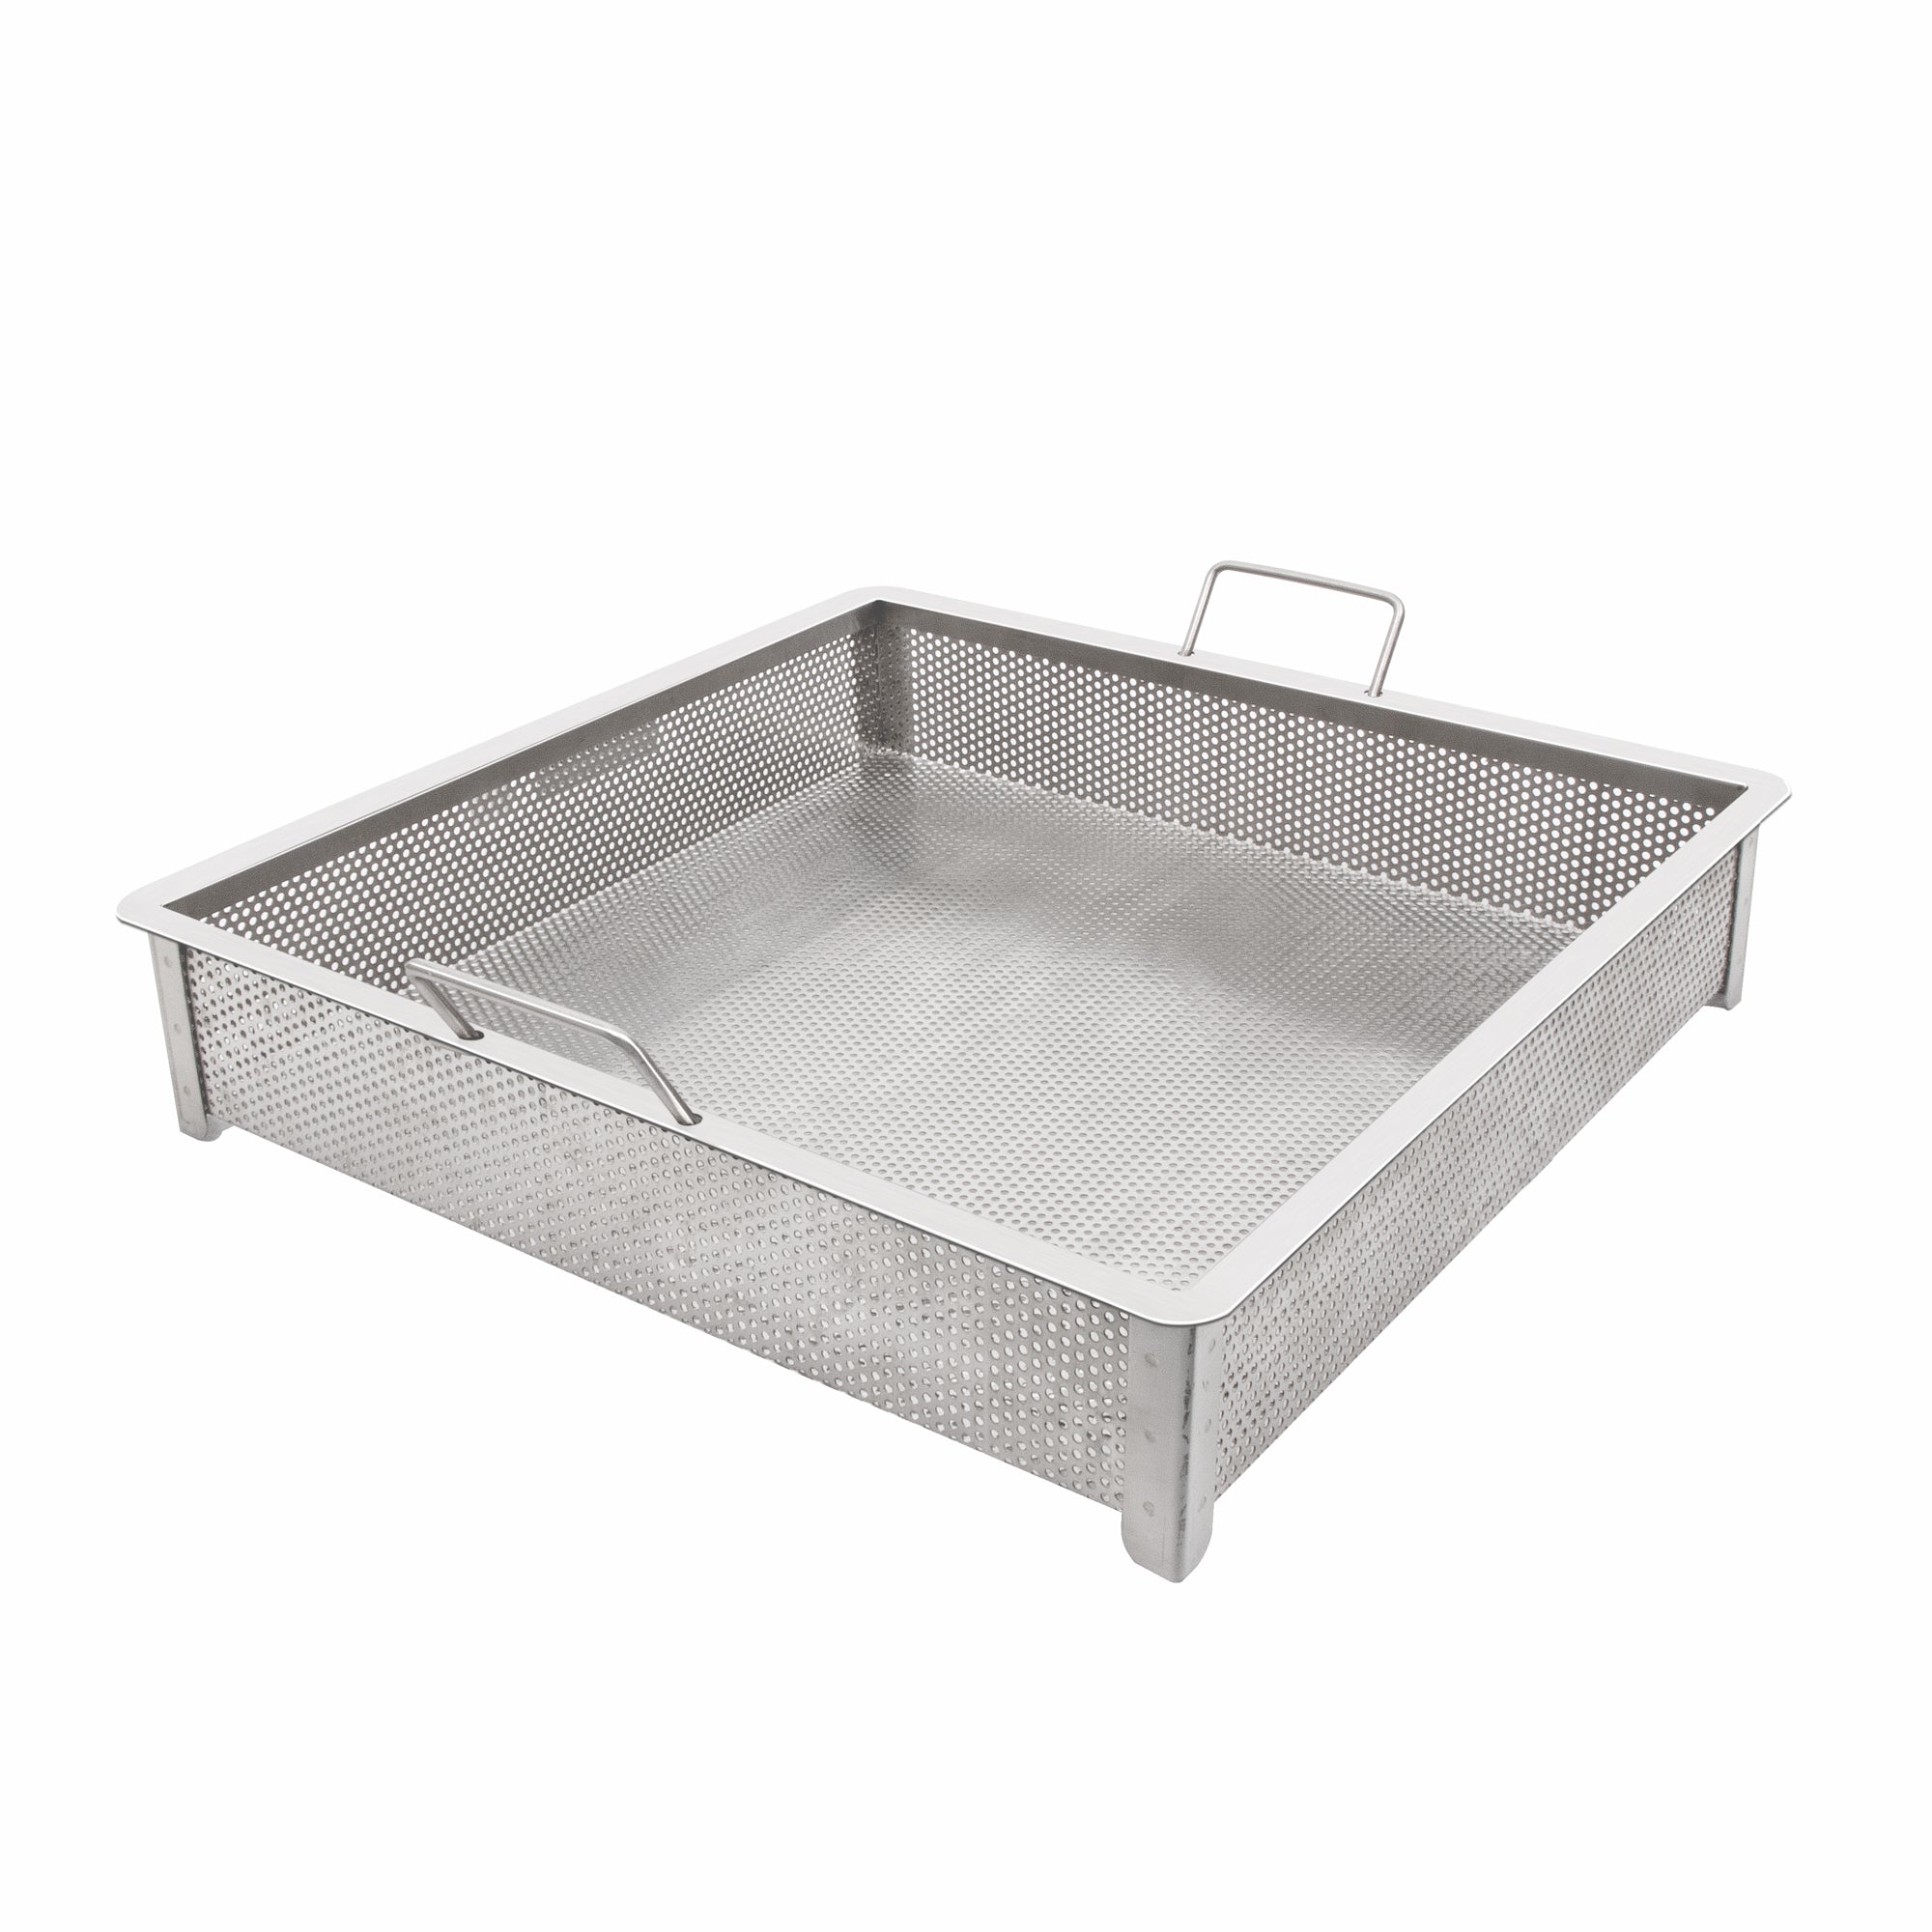 GSW Stainless Steel Compartment ETL Certified Drop-In Sink Drain Basket (20" x 20", Drain Basket)